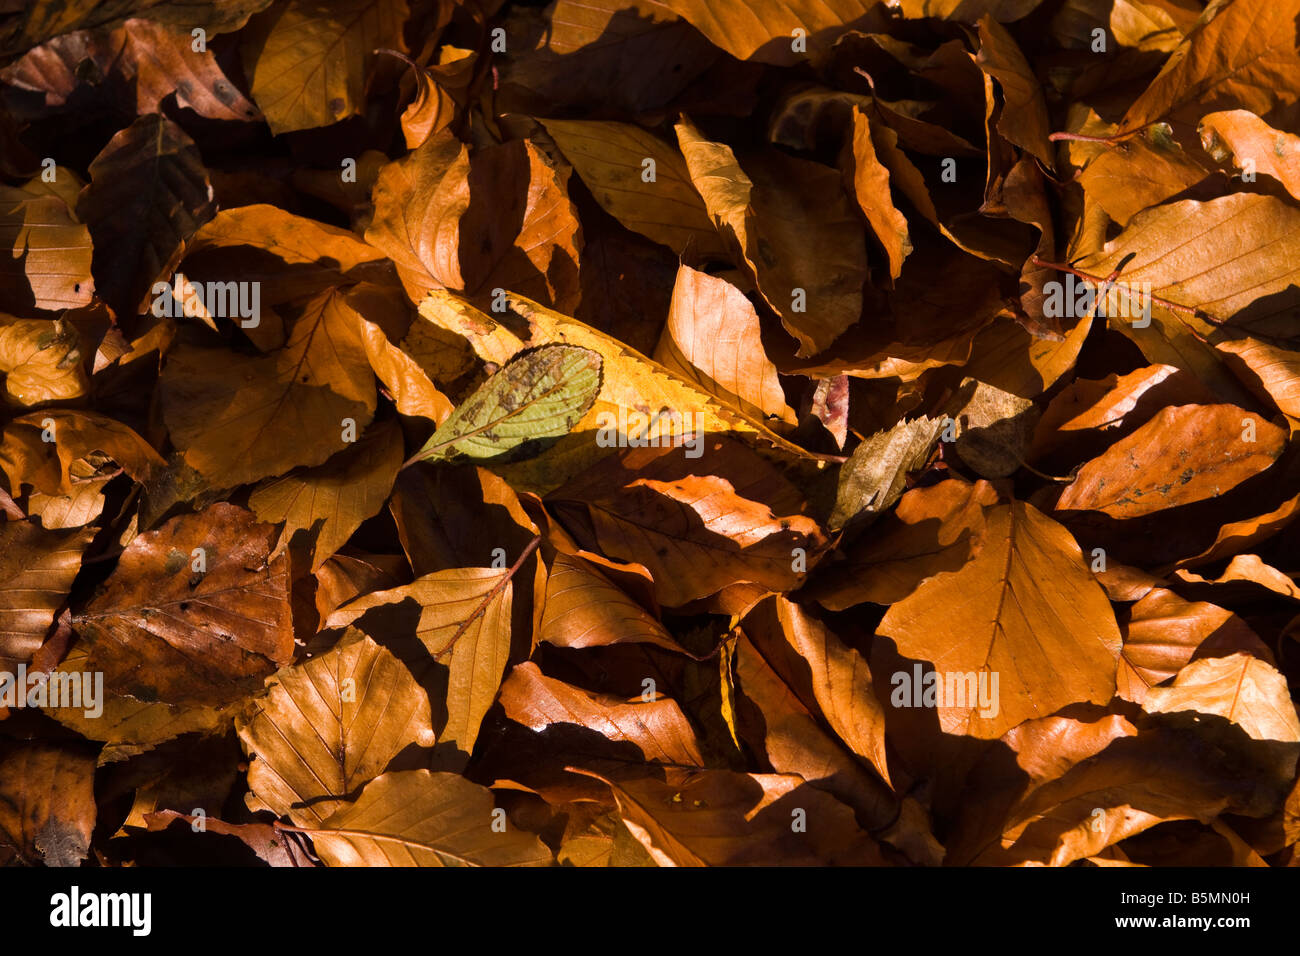 UK Cheshire autumn pile of fallen leaves Stock Photo